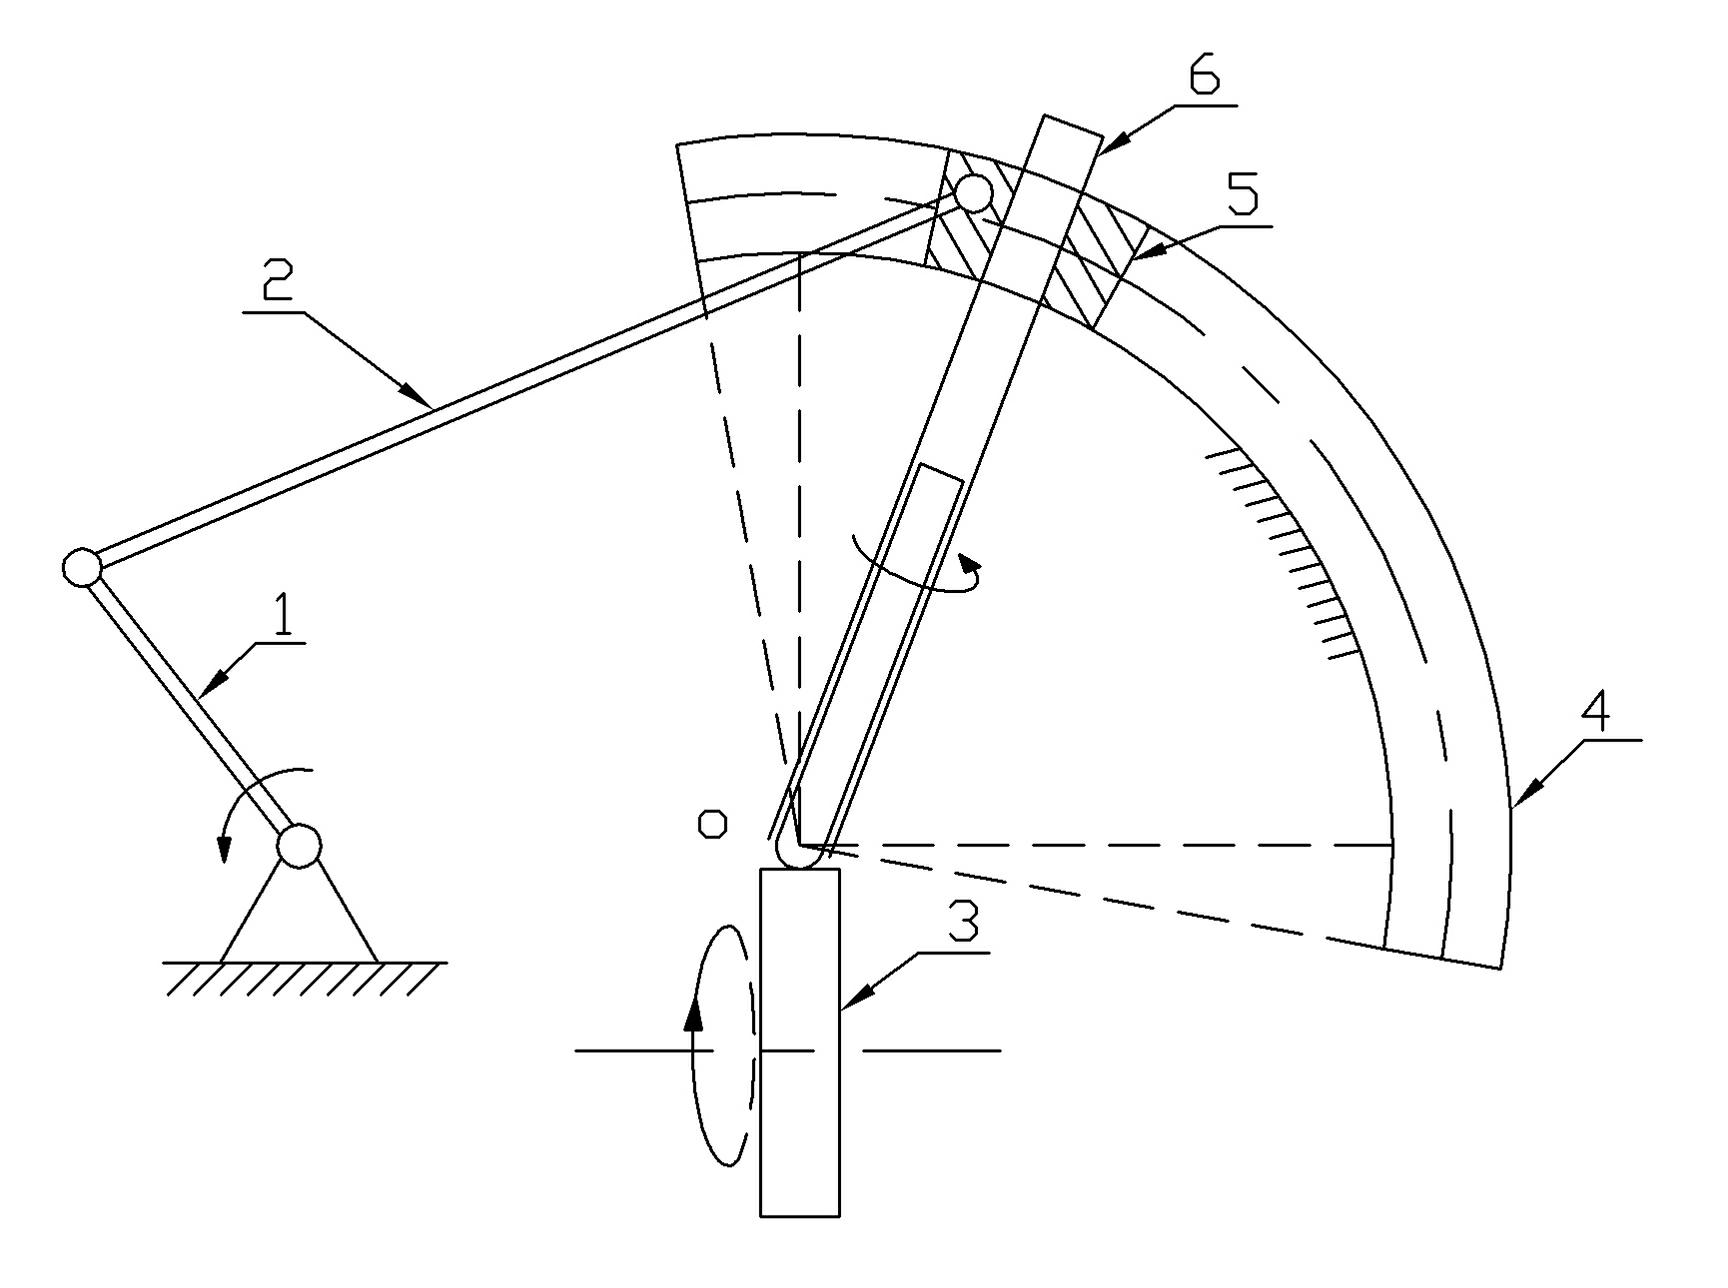 Work-piece contouring device